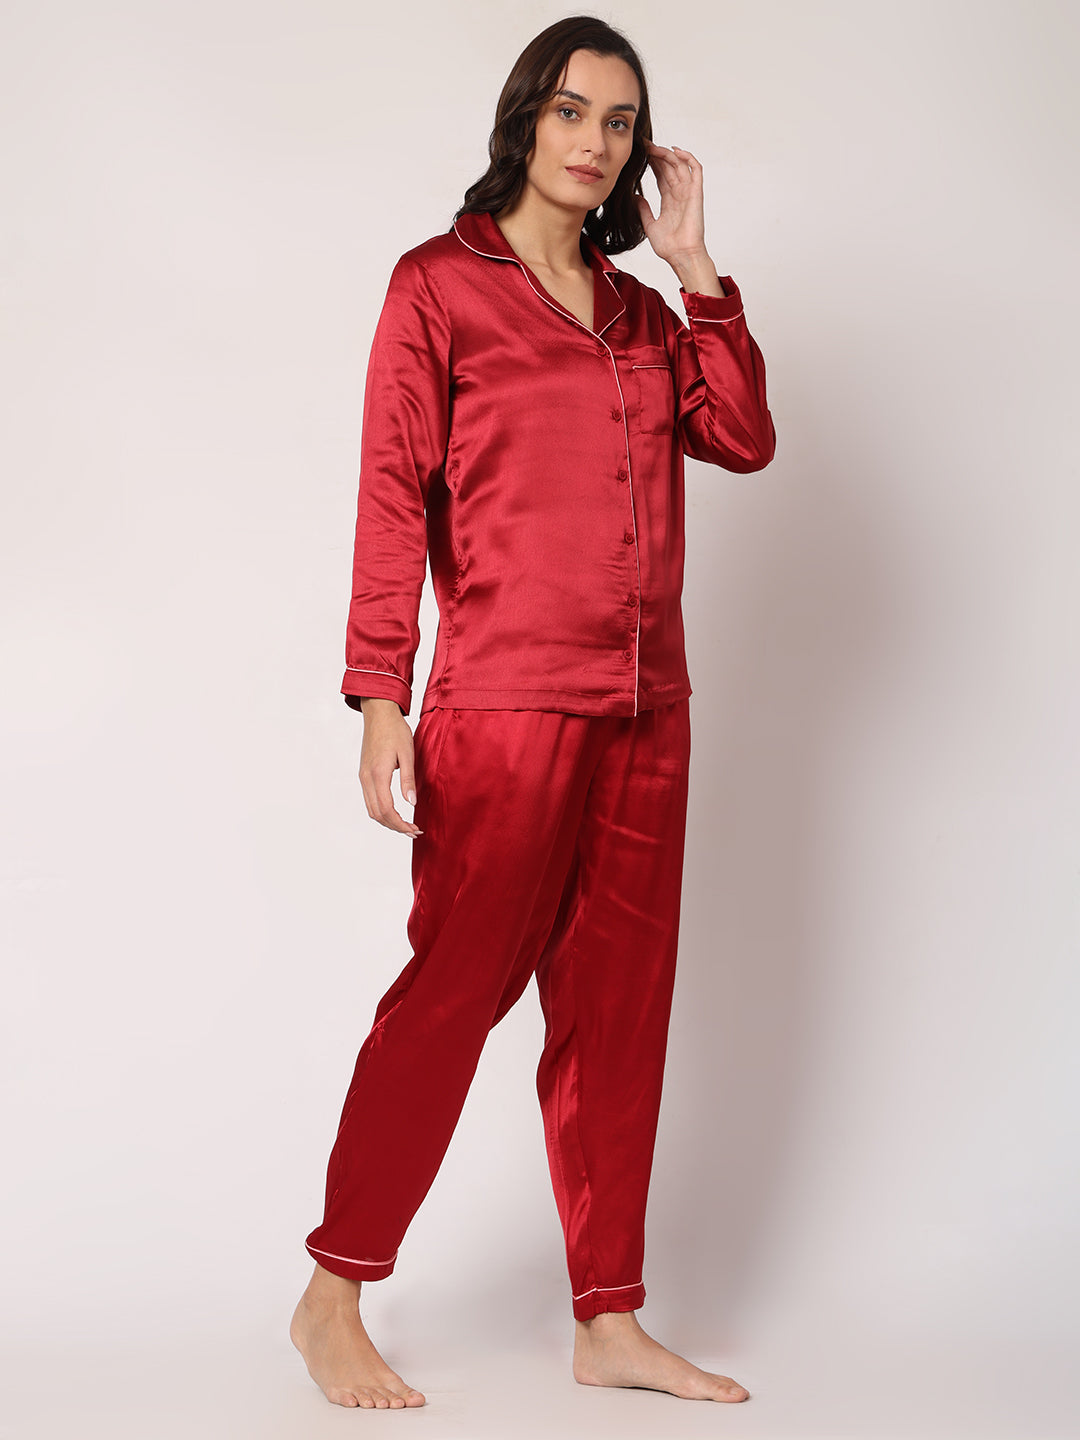 GOCHIKKO Women's Satin Plain Color Night Suit Set of Shirt & Pyjama Pack of 1(MAROON)